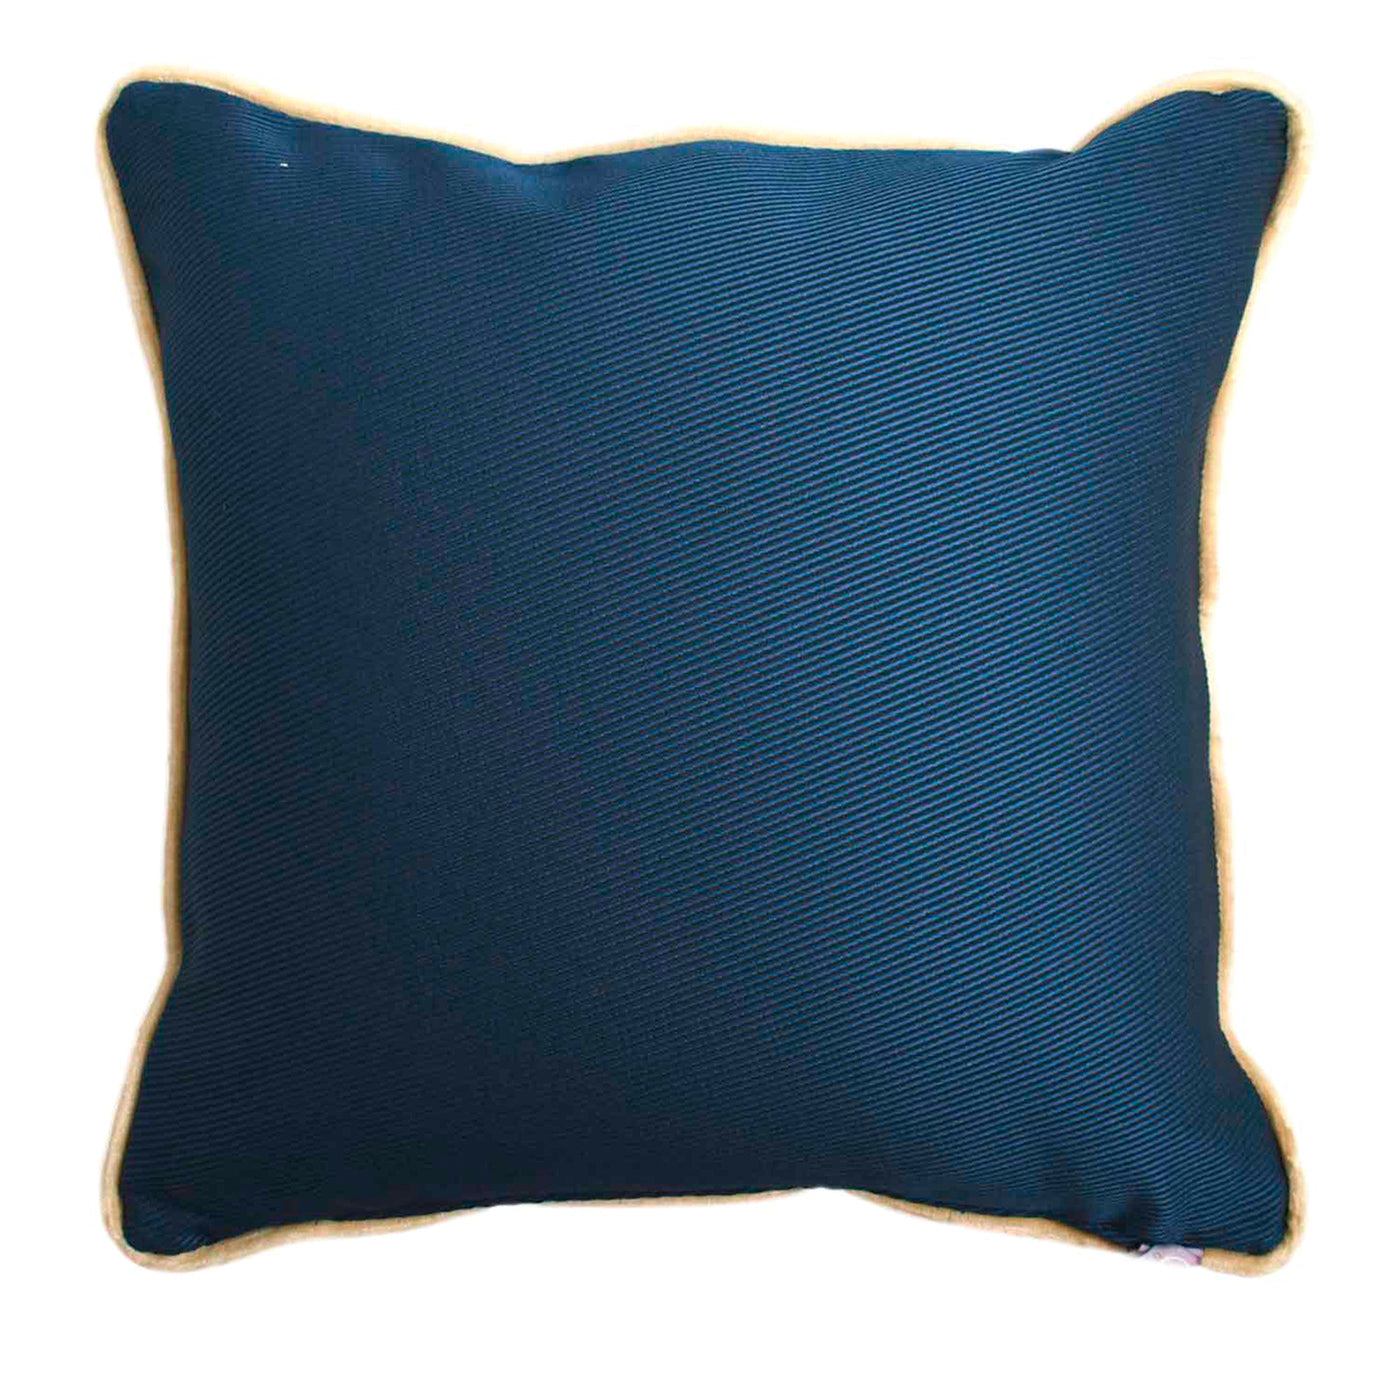 Blue and Beige Square Carrè Cushion - Main view